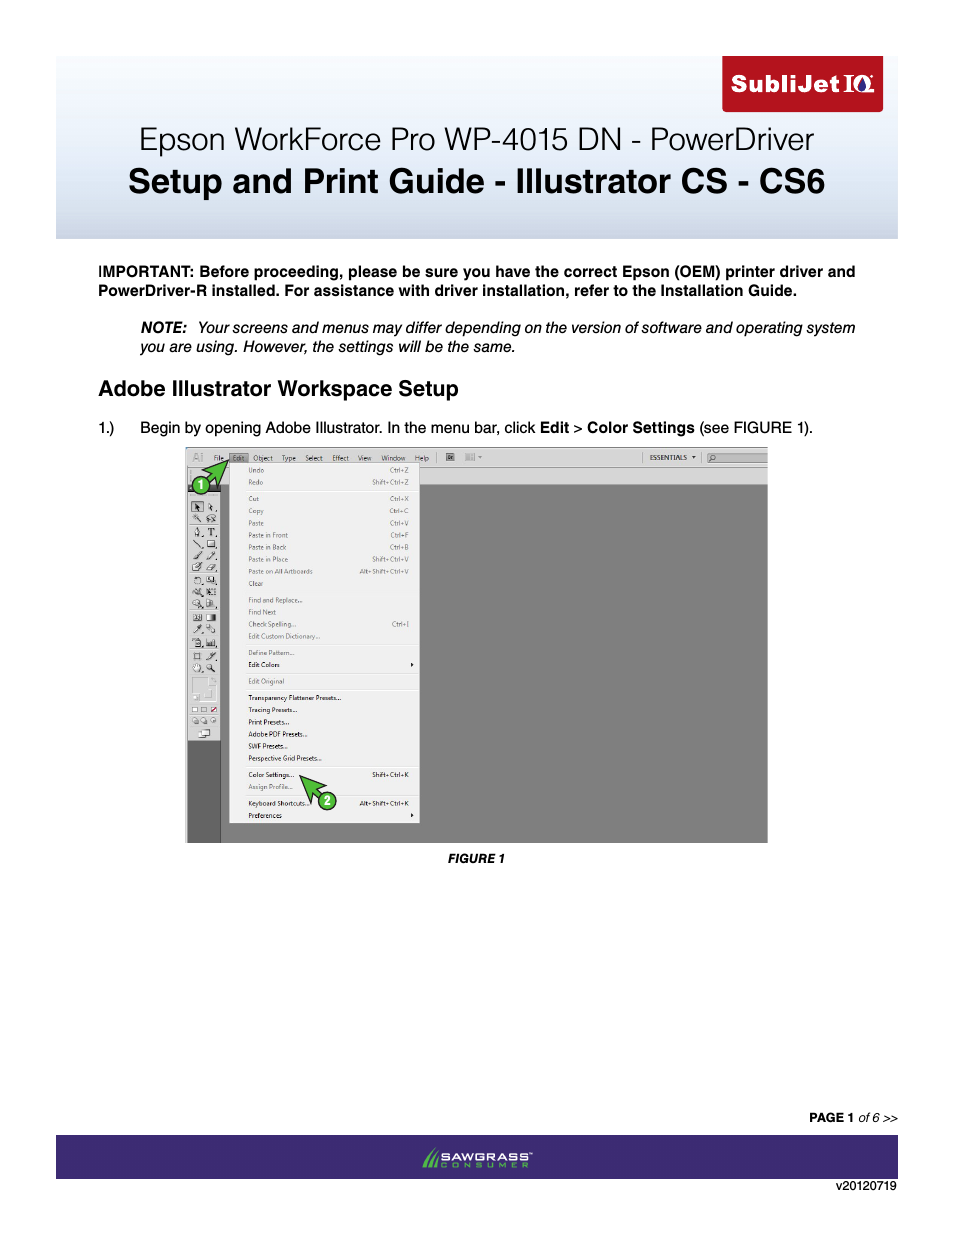 SubliJet IQ Epson WP-4015 (Power Driver Setup): Print & Setup Guide Adobe Illustrator CS - CS6